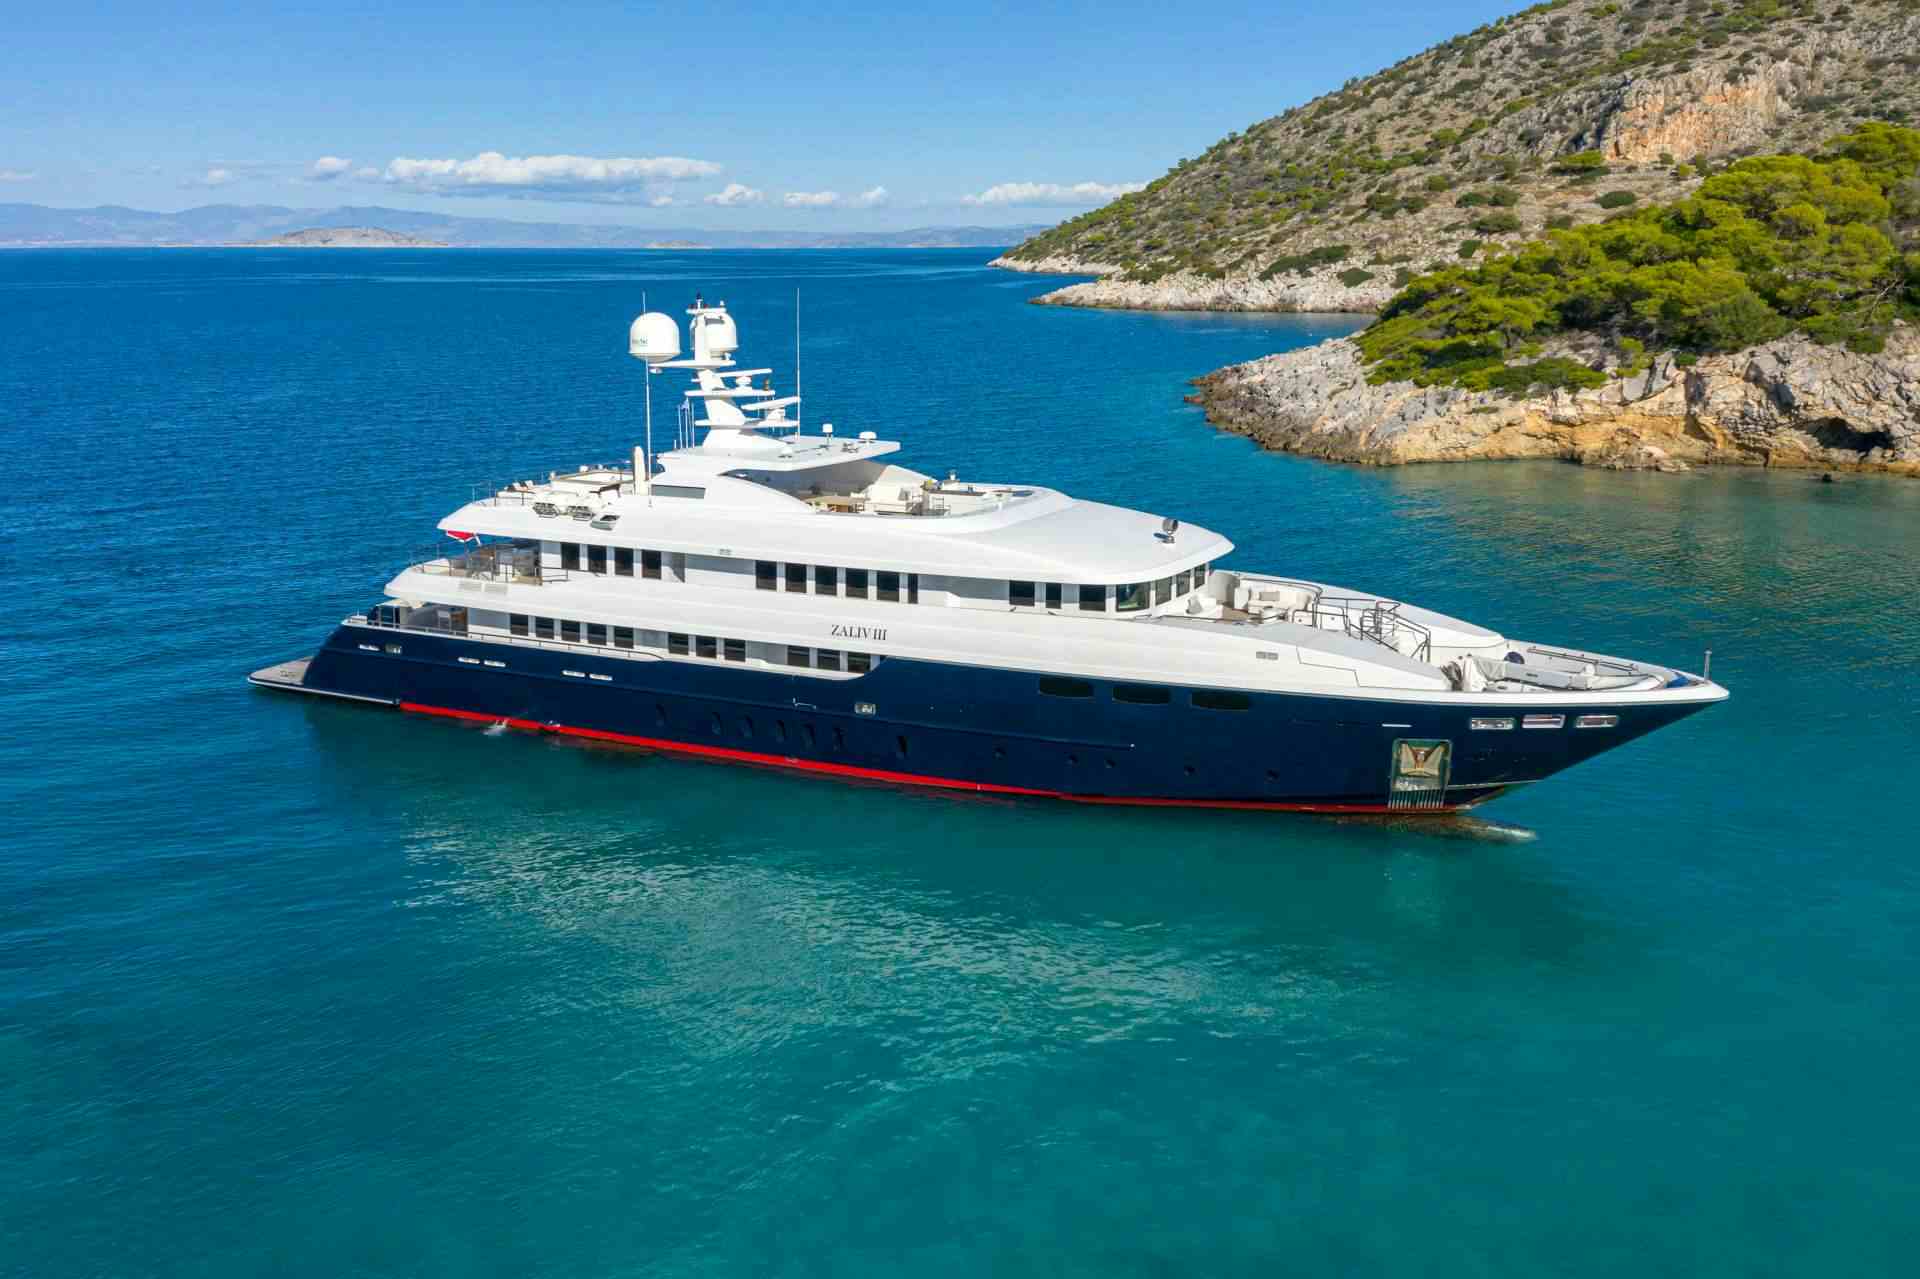 zaliv iii - Yacht Charter Italy & Boat hire in East Mediterranean 1